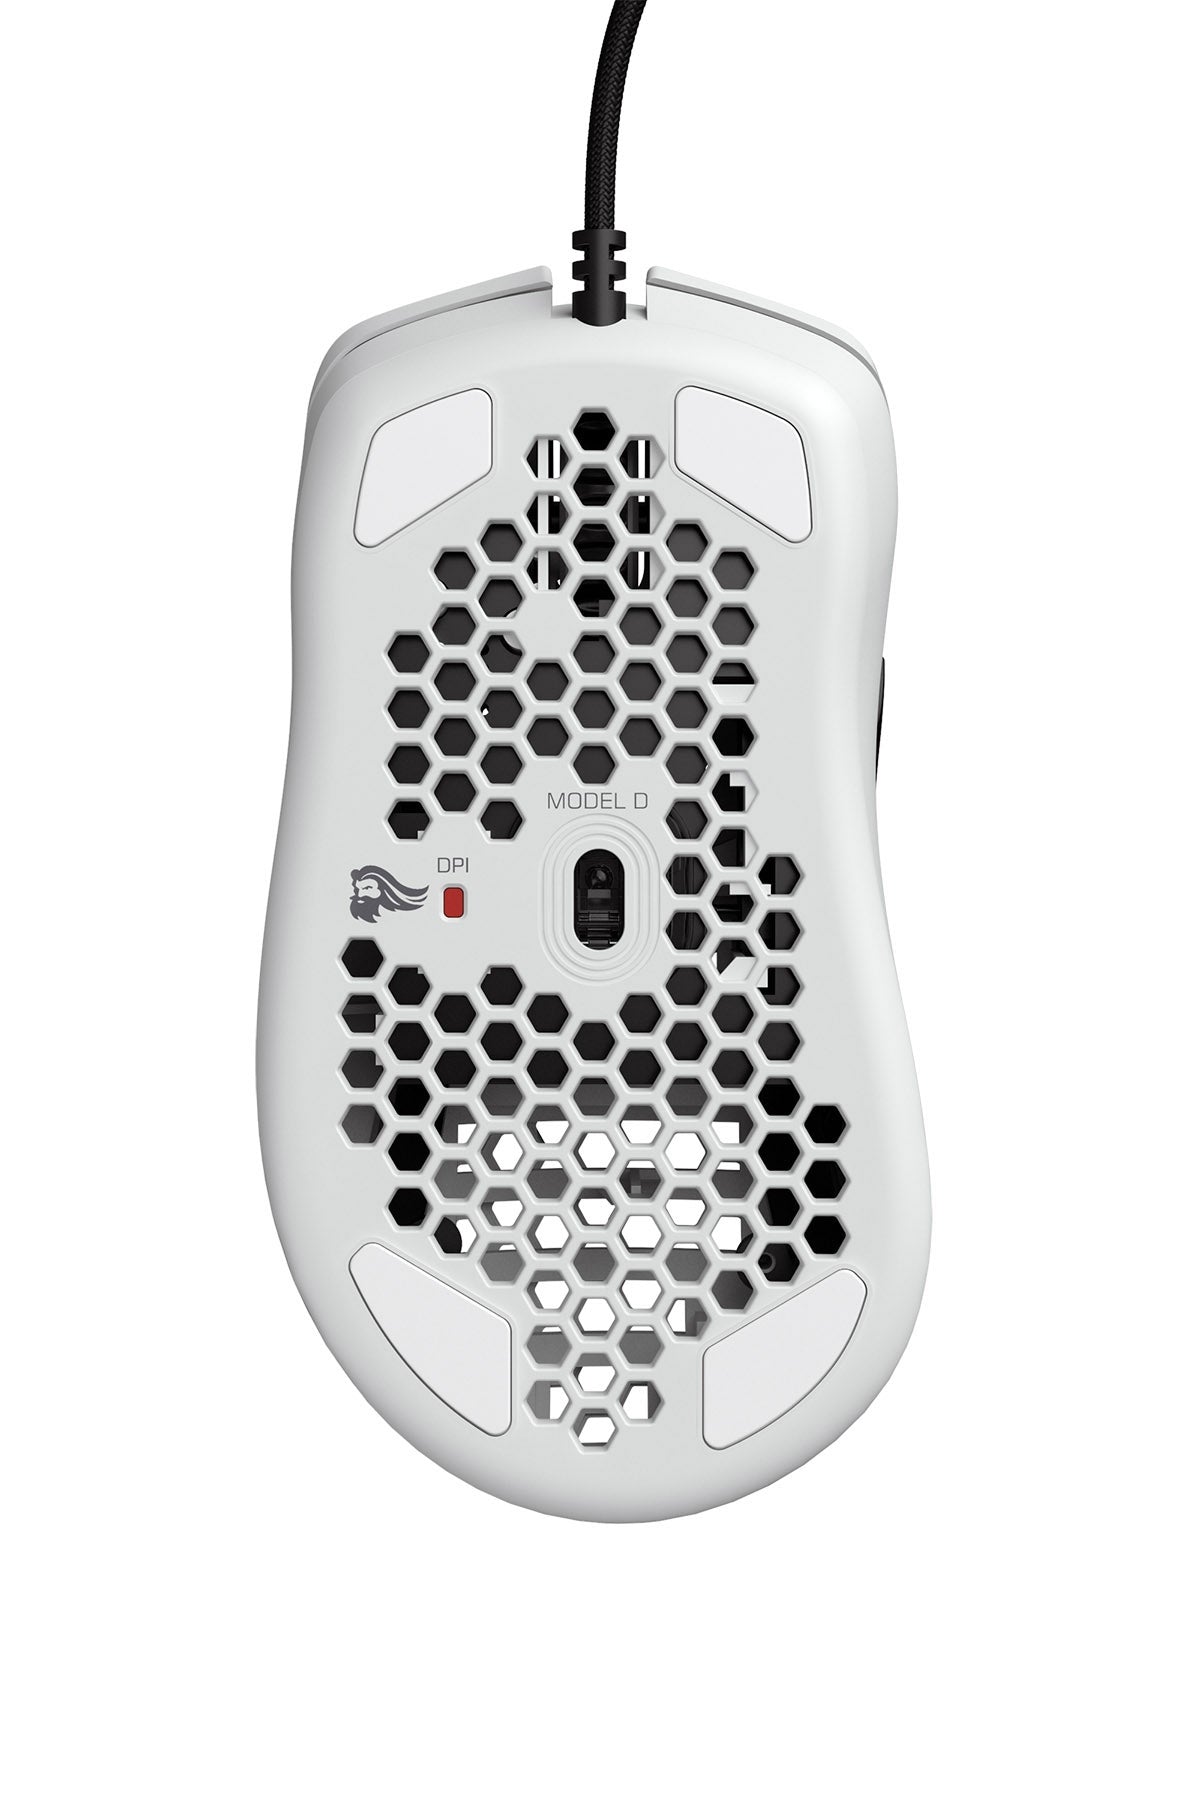 Glorious PC Model D Glossy White Ergonomic Lightweight Gaming Mouse MKFLMGDUO0 |27523|